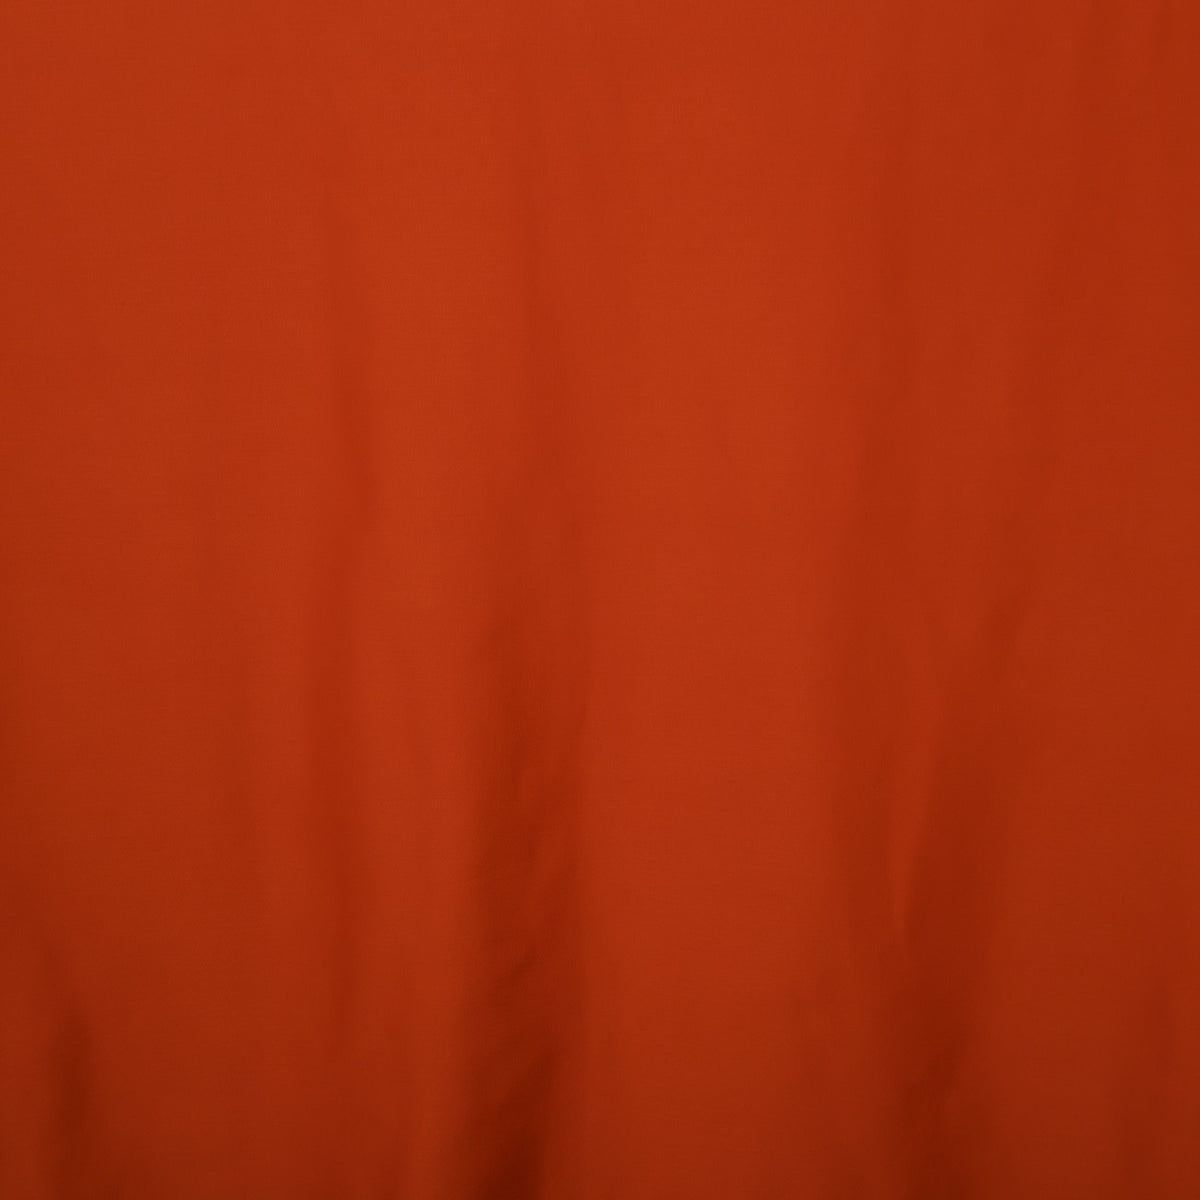 Night curtain orange Soft